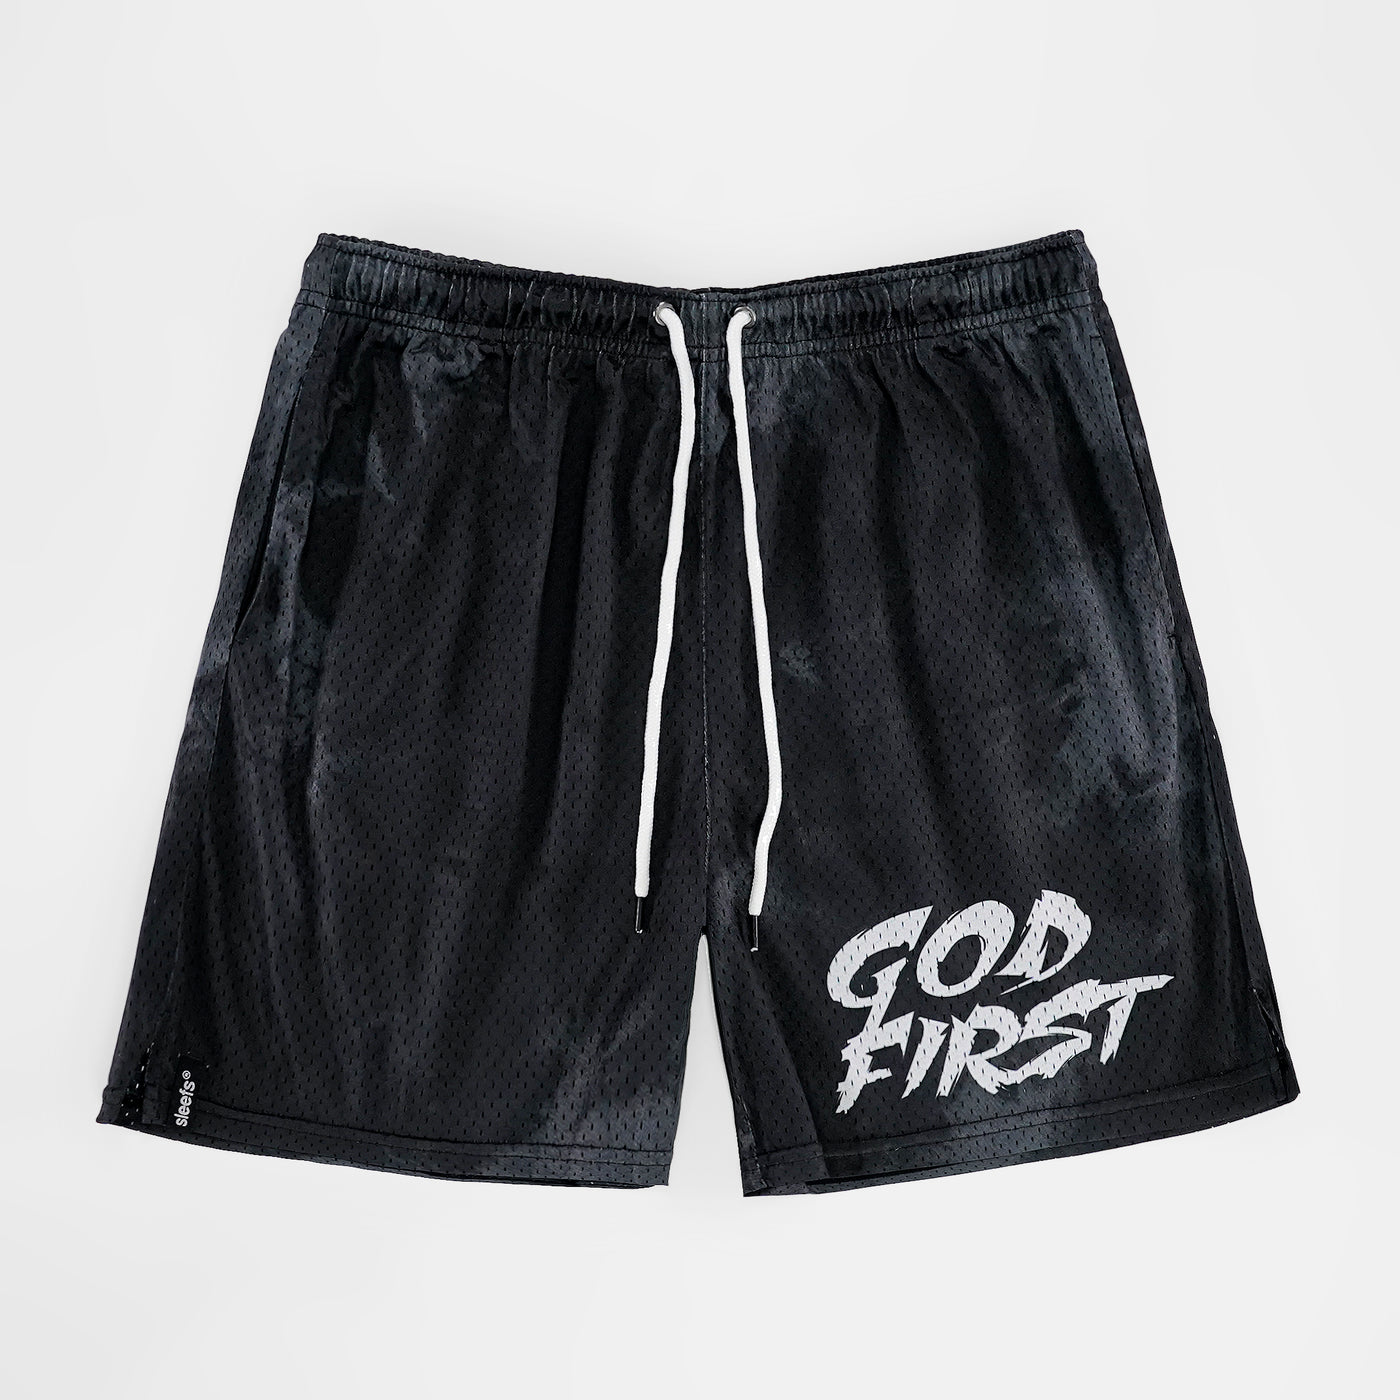 God First Black Shorts - 7"